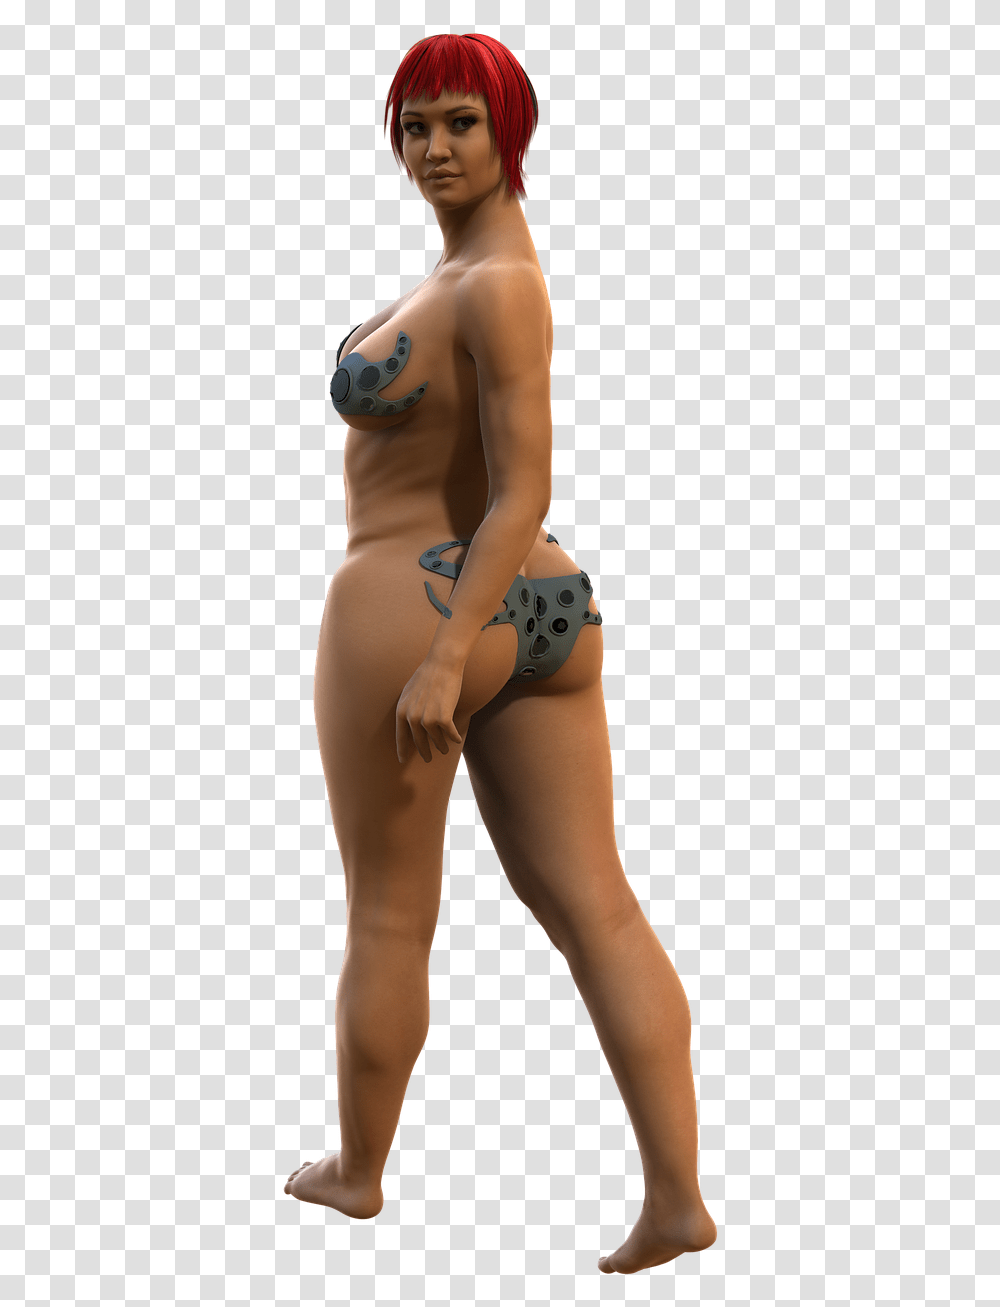 Plus Size Woman Bikini Free Photo, Person, Underwear, Lingerie Transparent Png